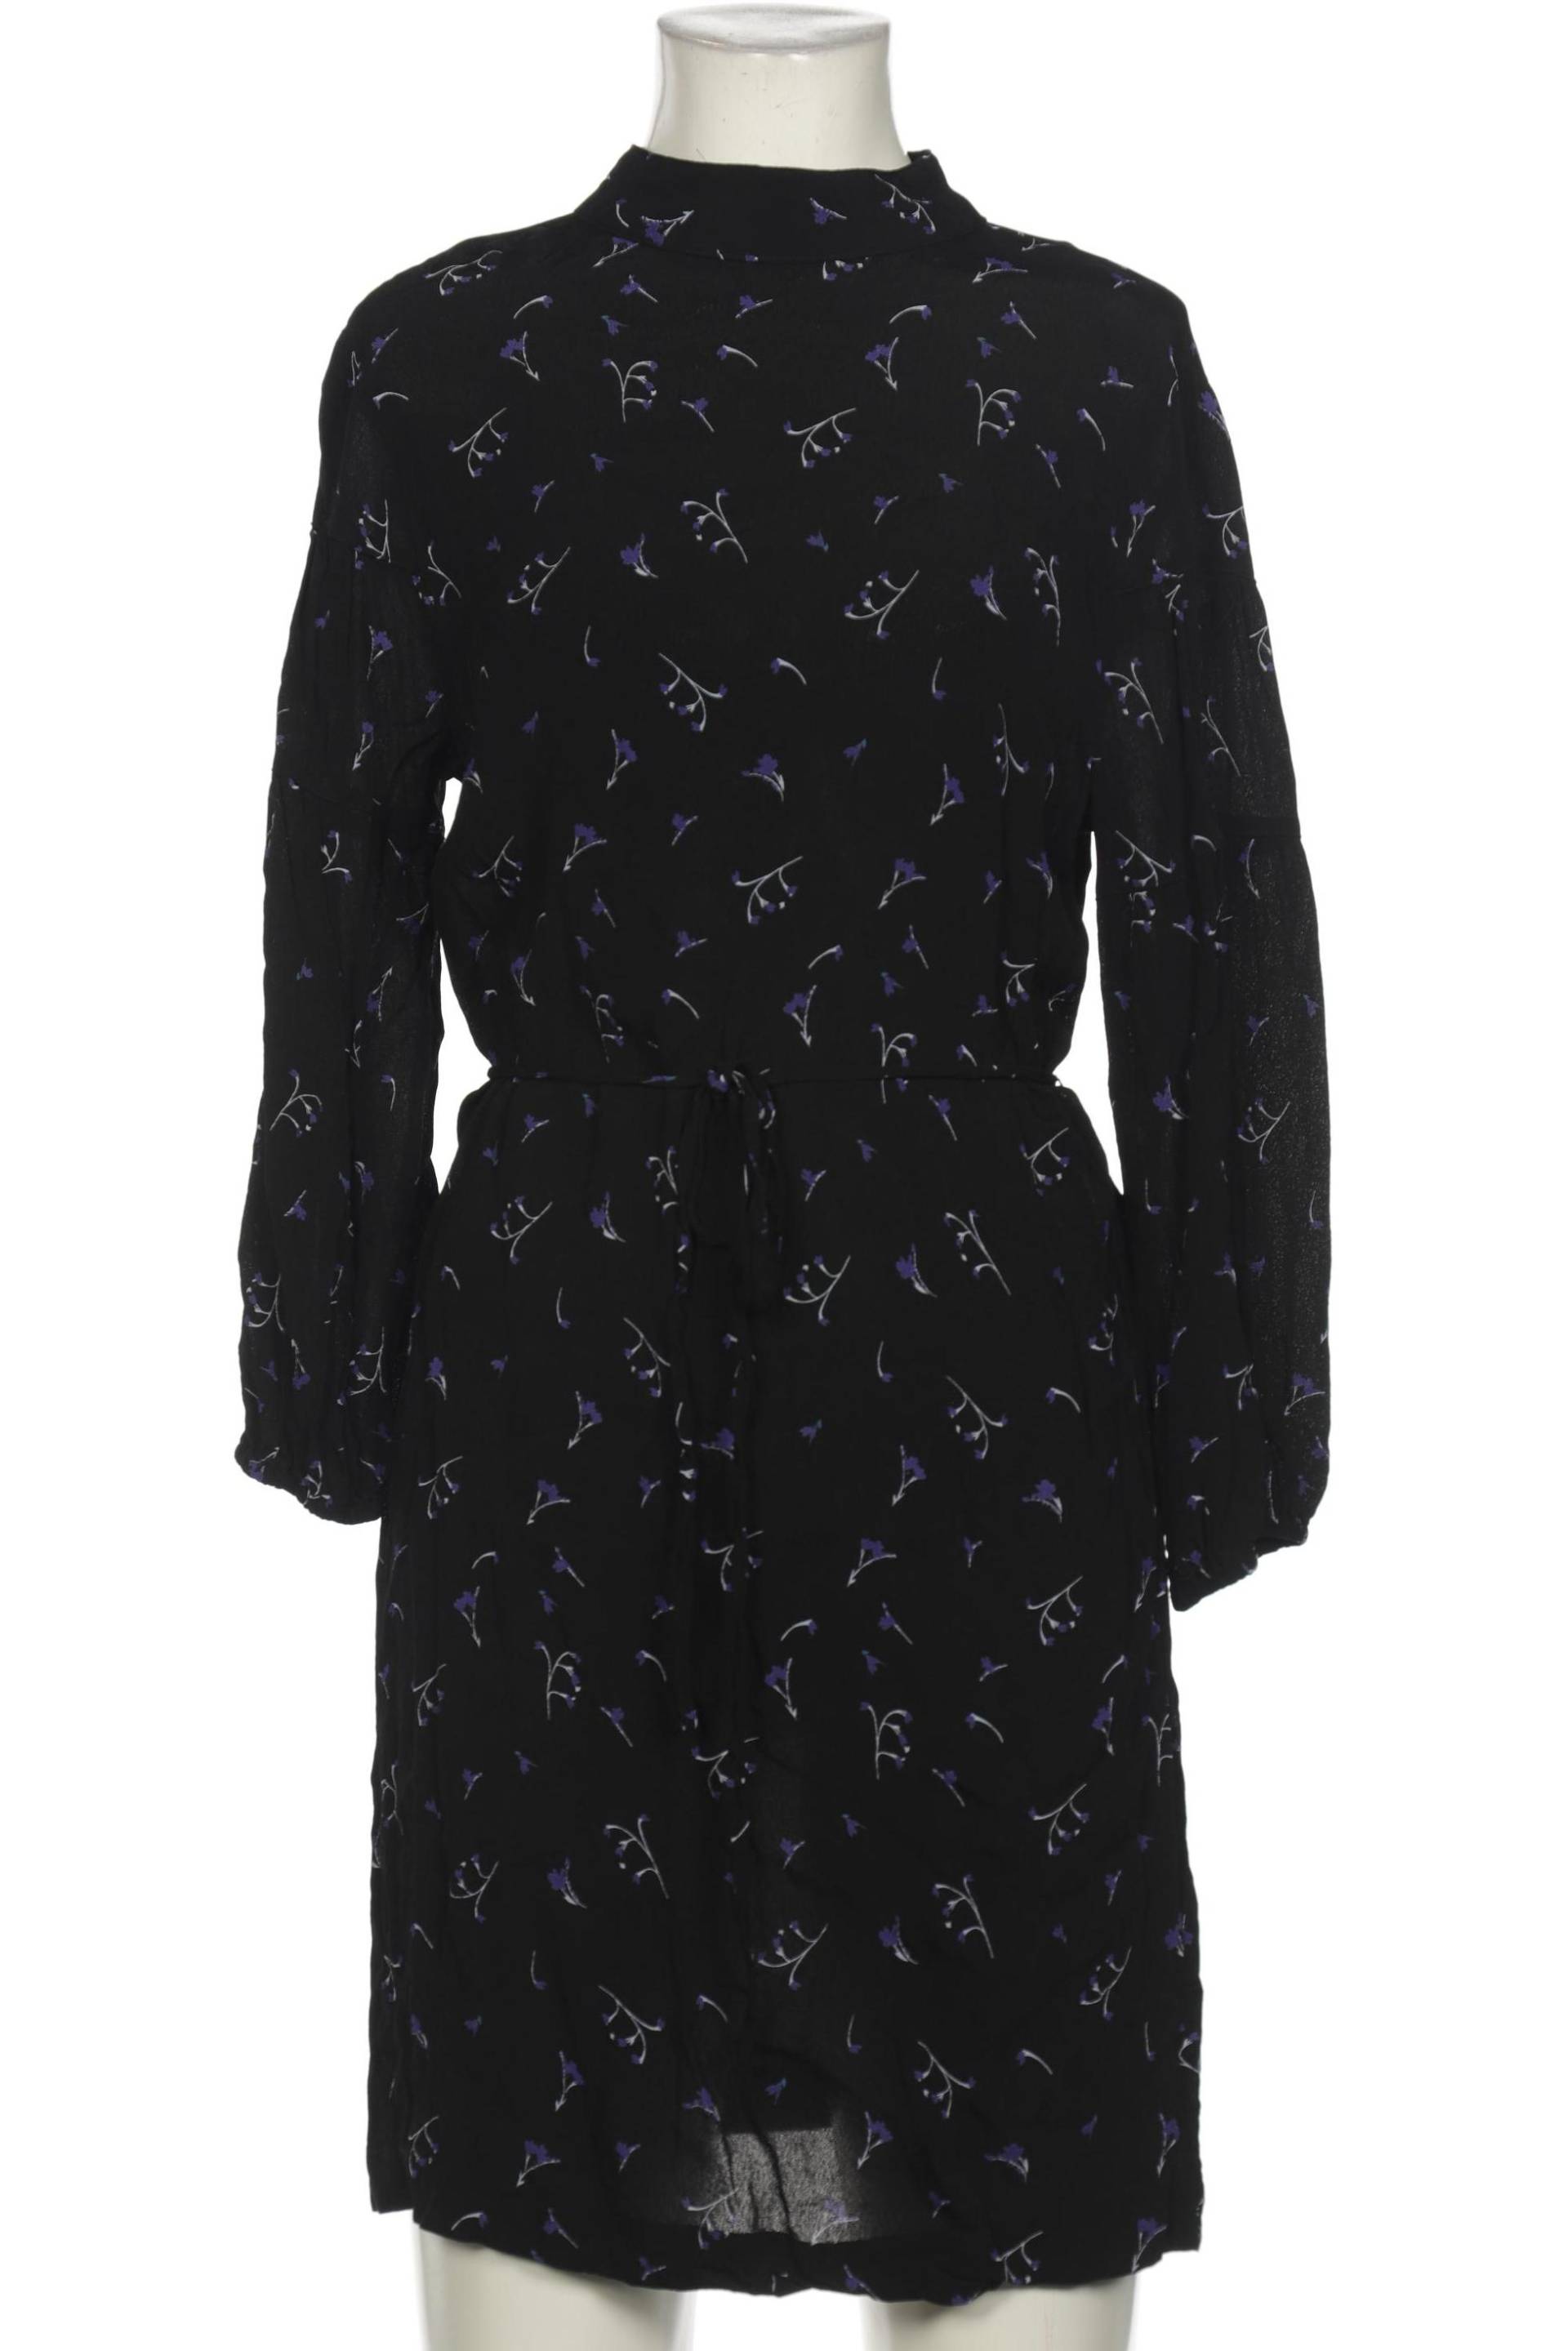 MOSS COPENHAGEN Damen Kleid, schwarz von moss copenhagen